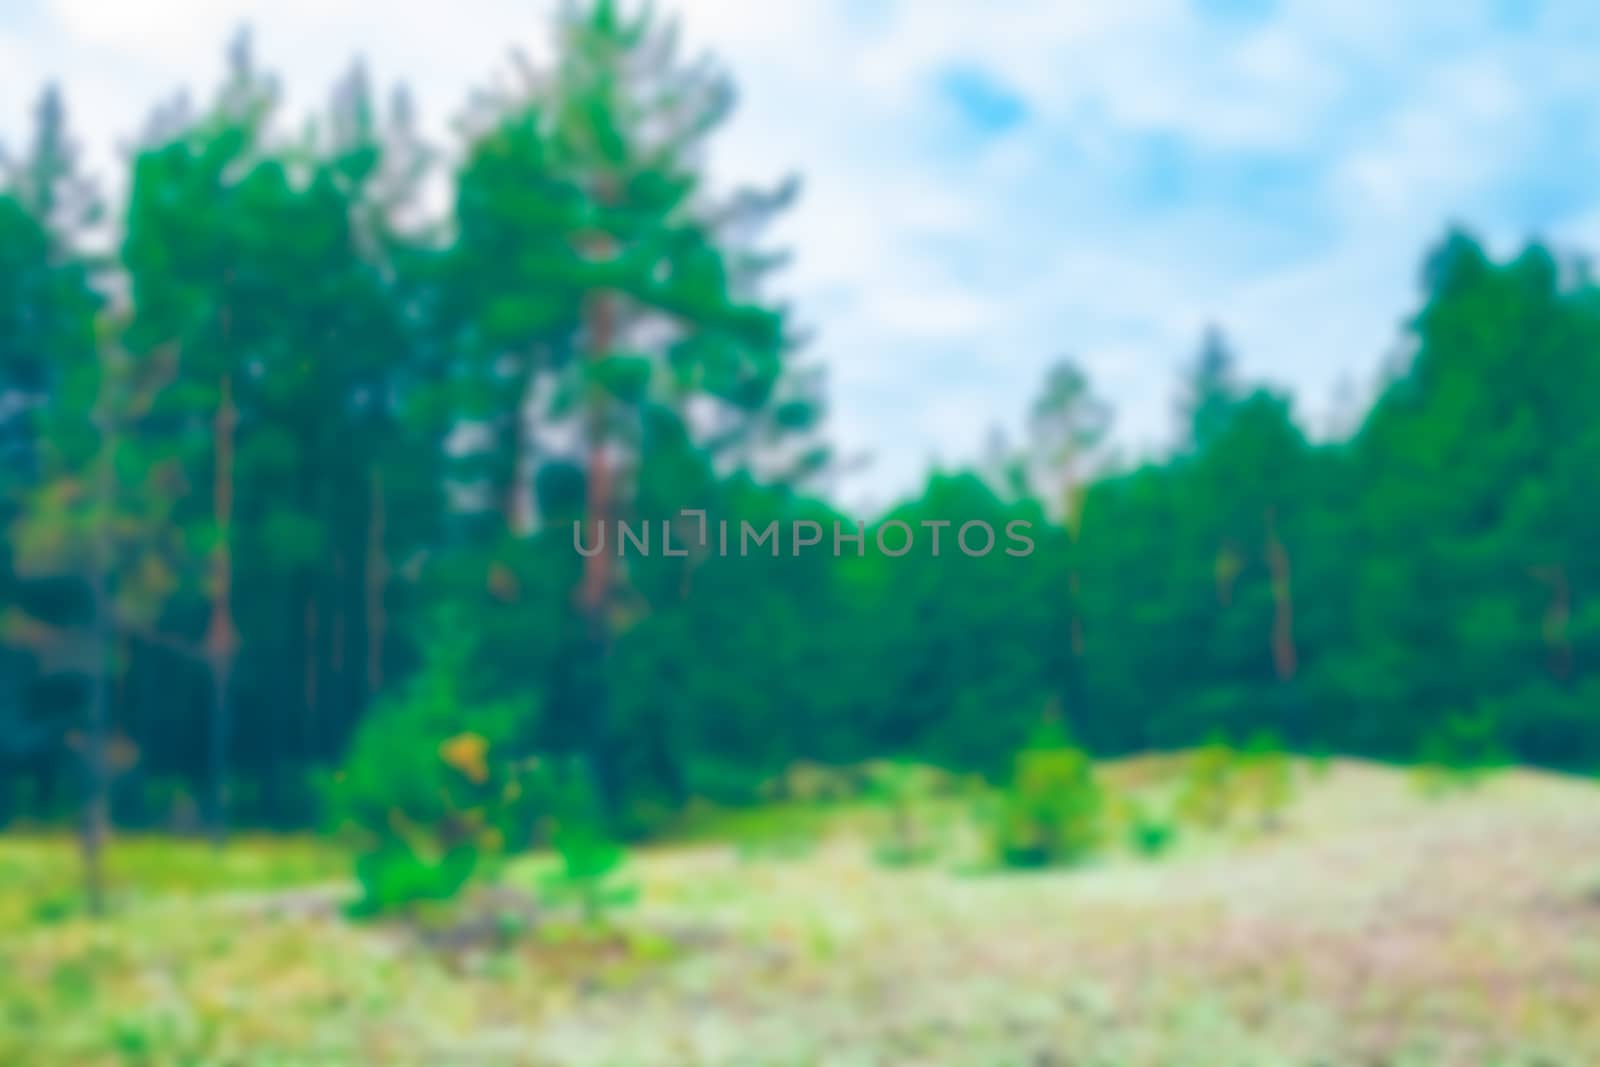 Green pine forest - soft lens bokeh image. Defocused background